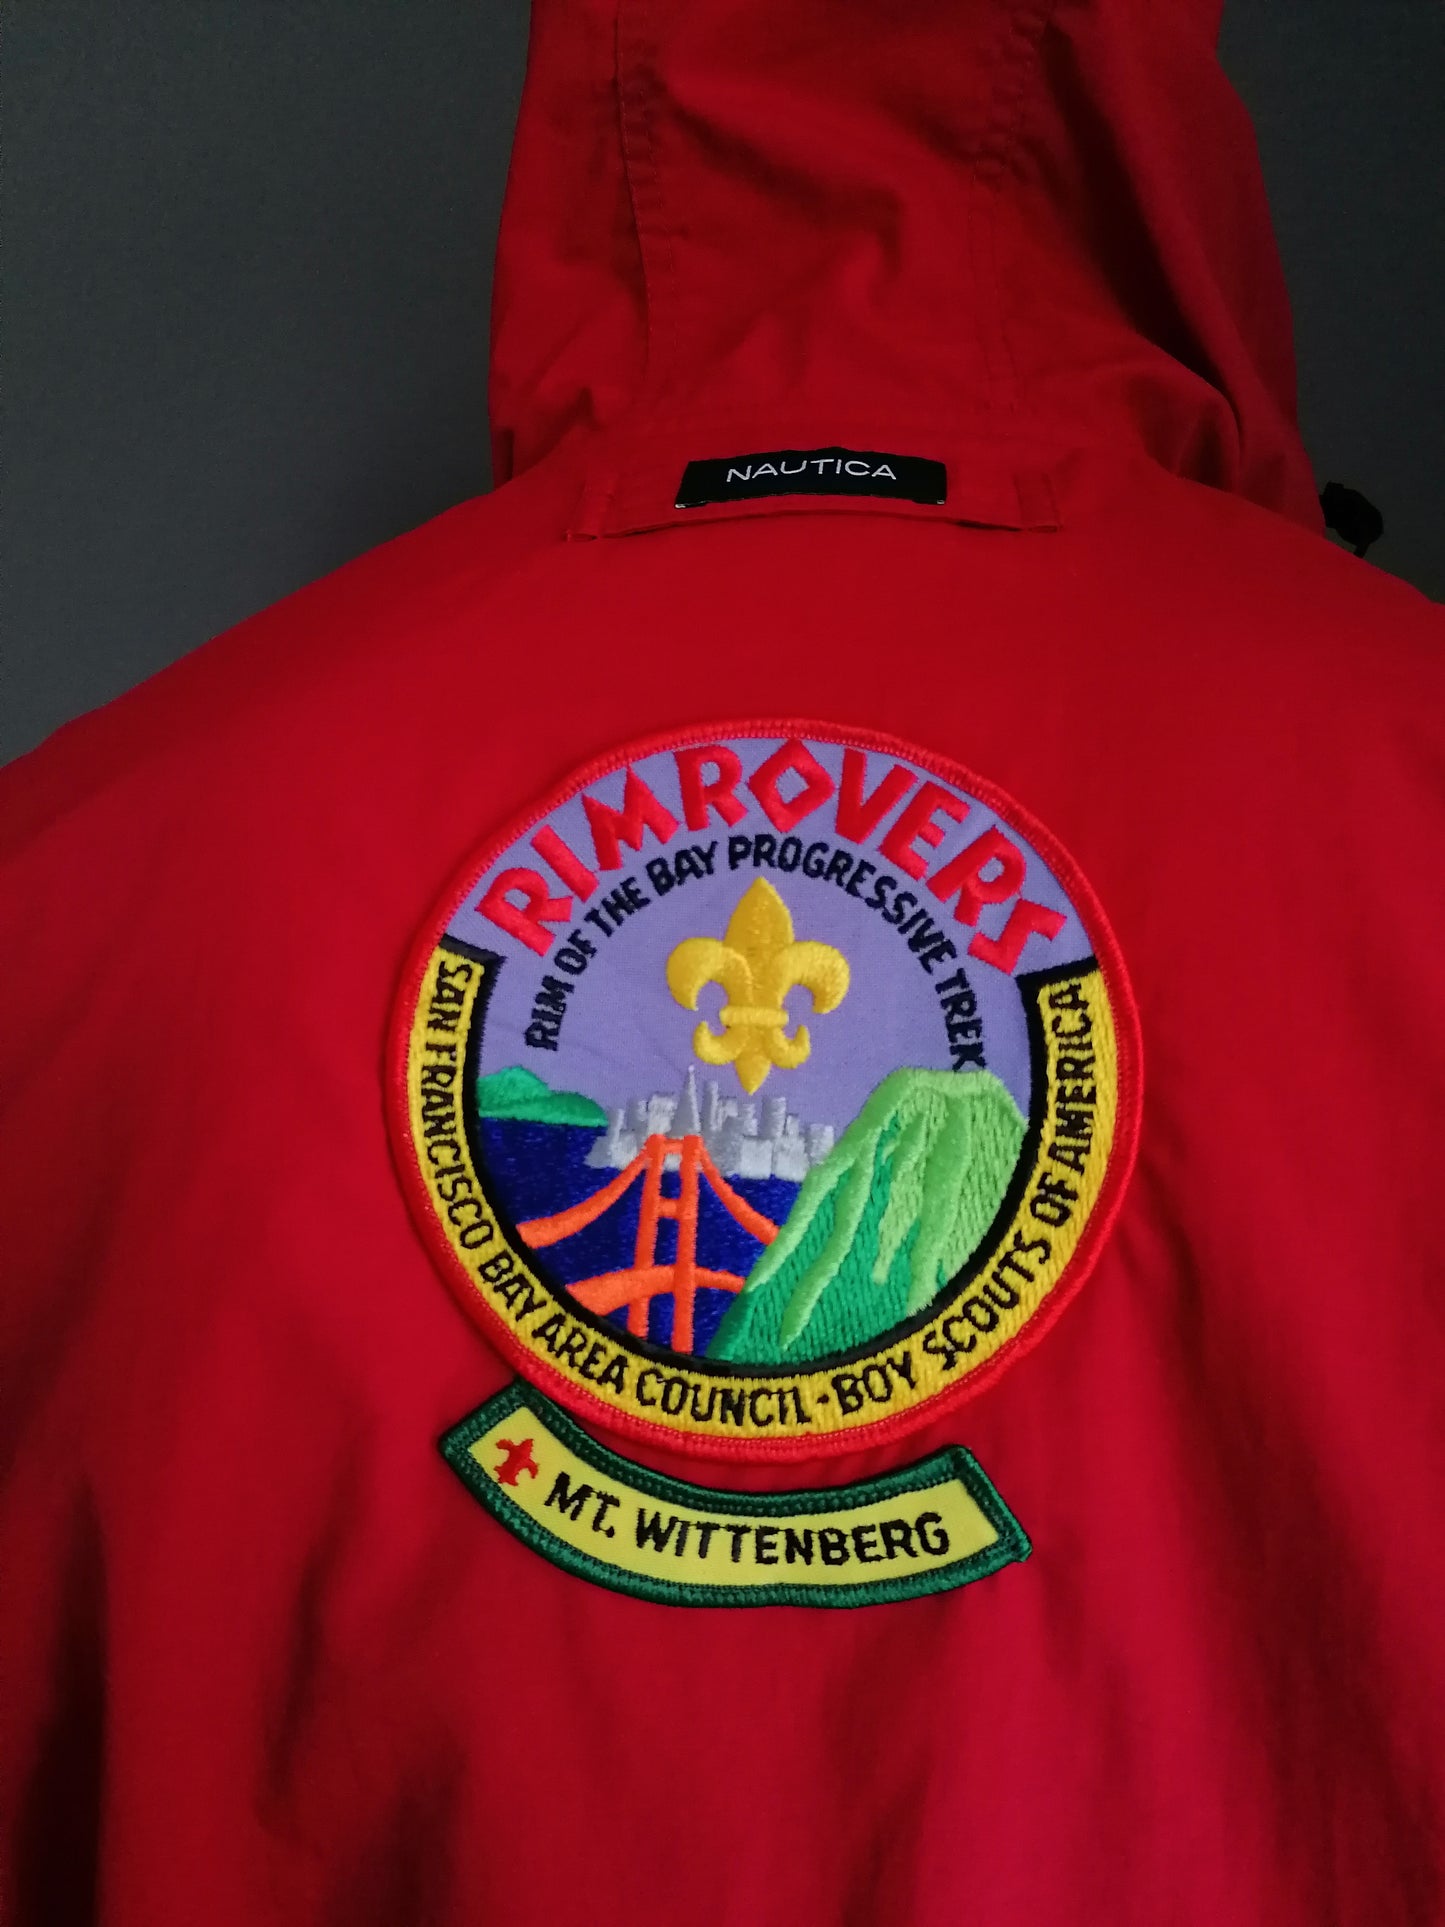 Vintage Nylon Nautica Boy Scout Summer Jack/Jacket. Colored red. Size M / L.